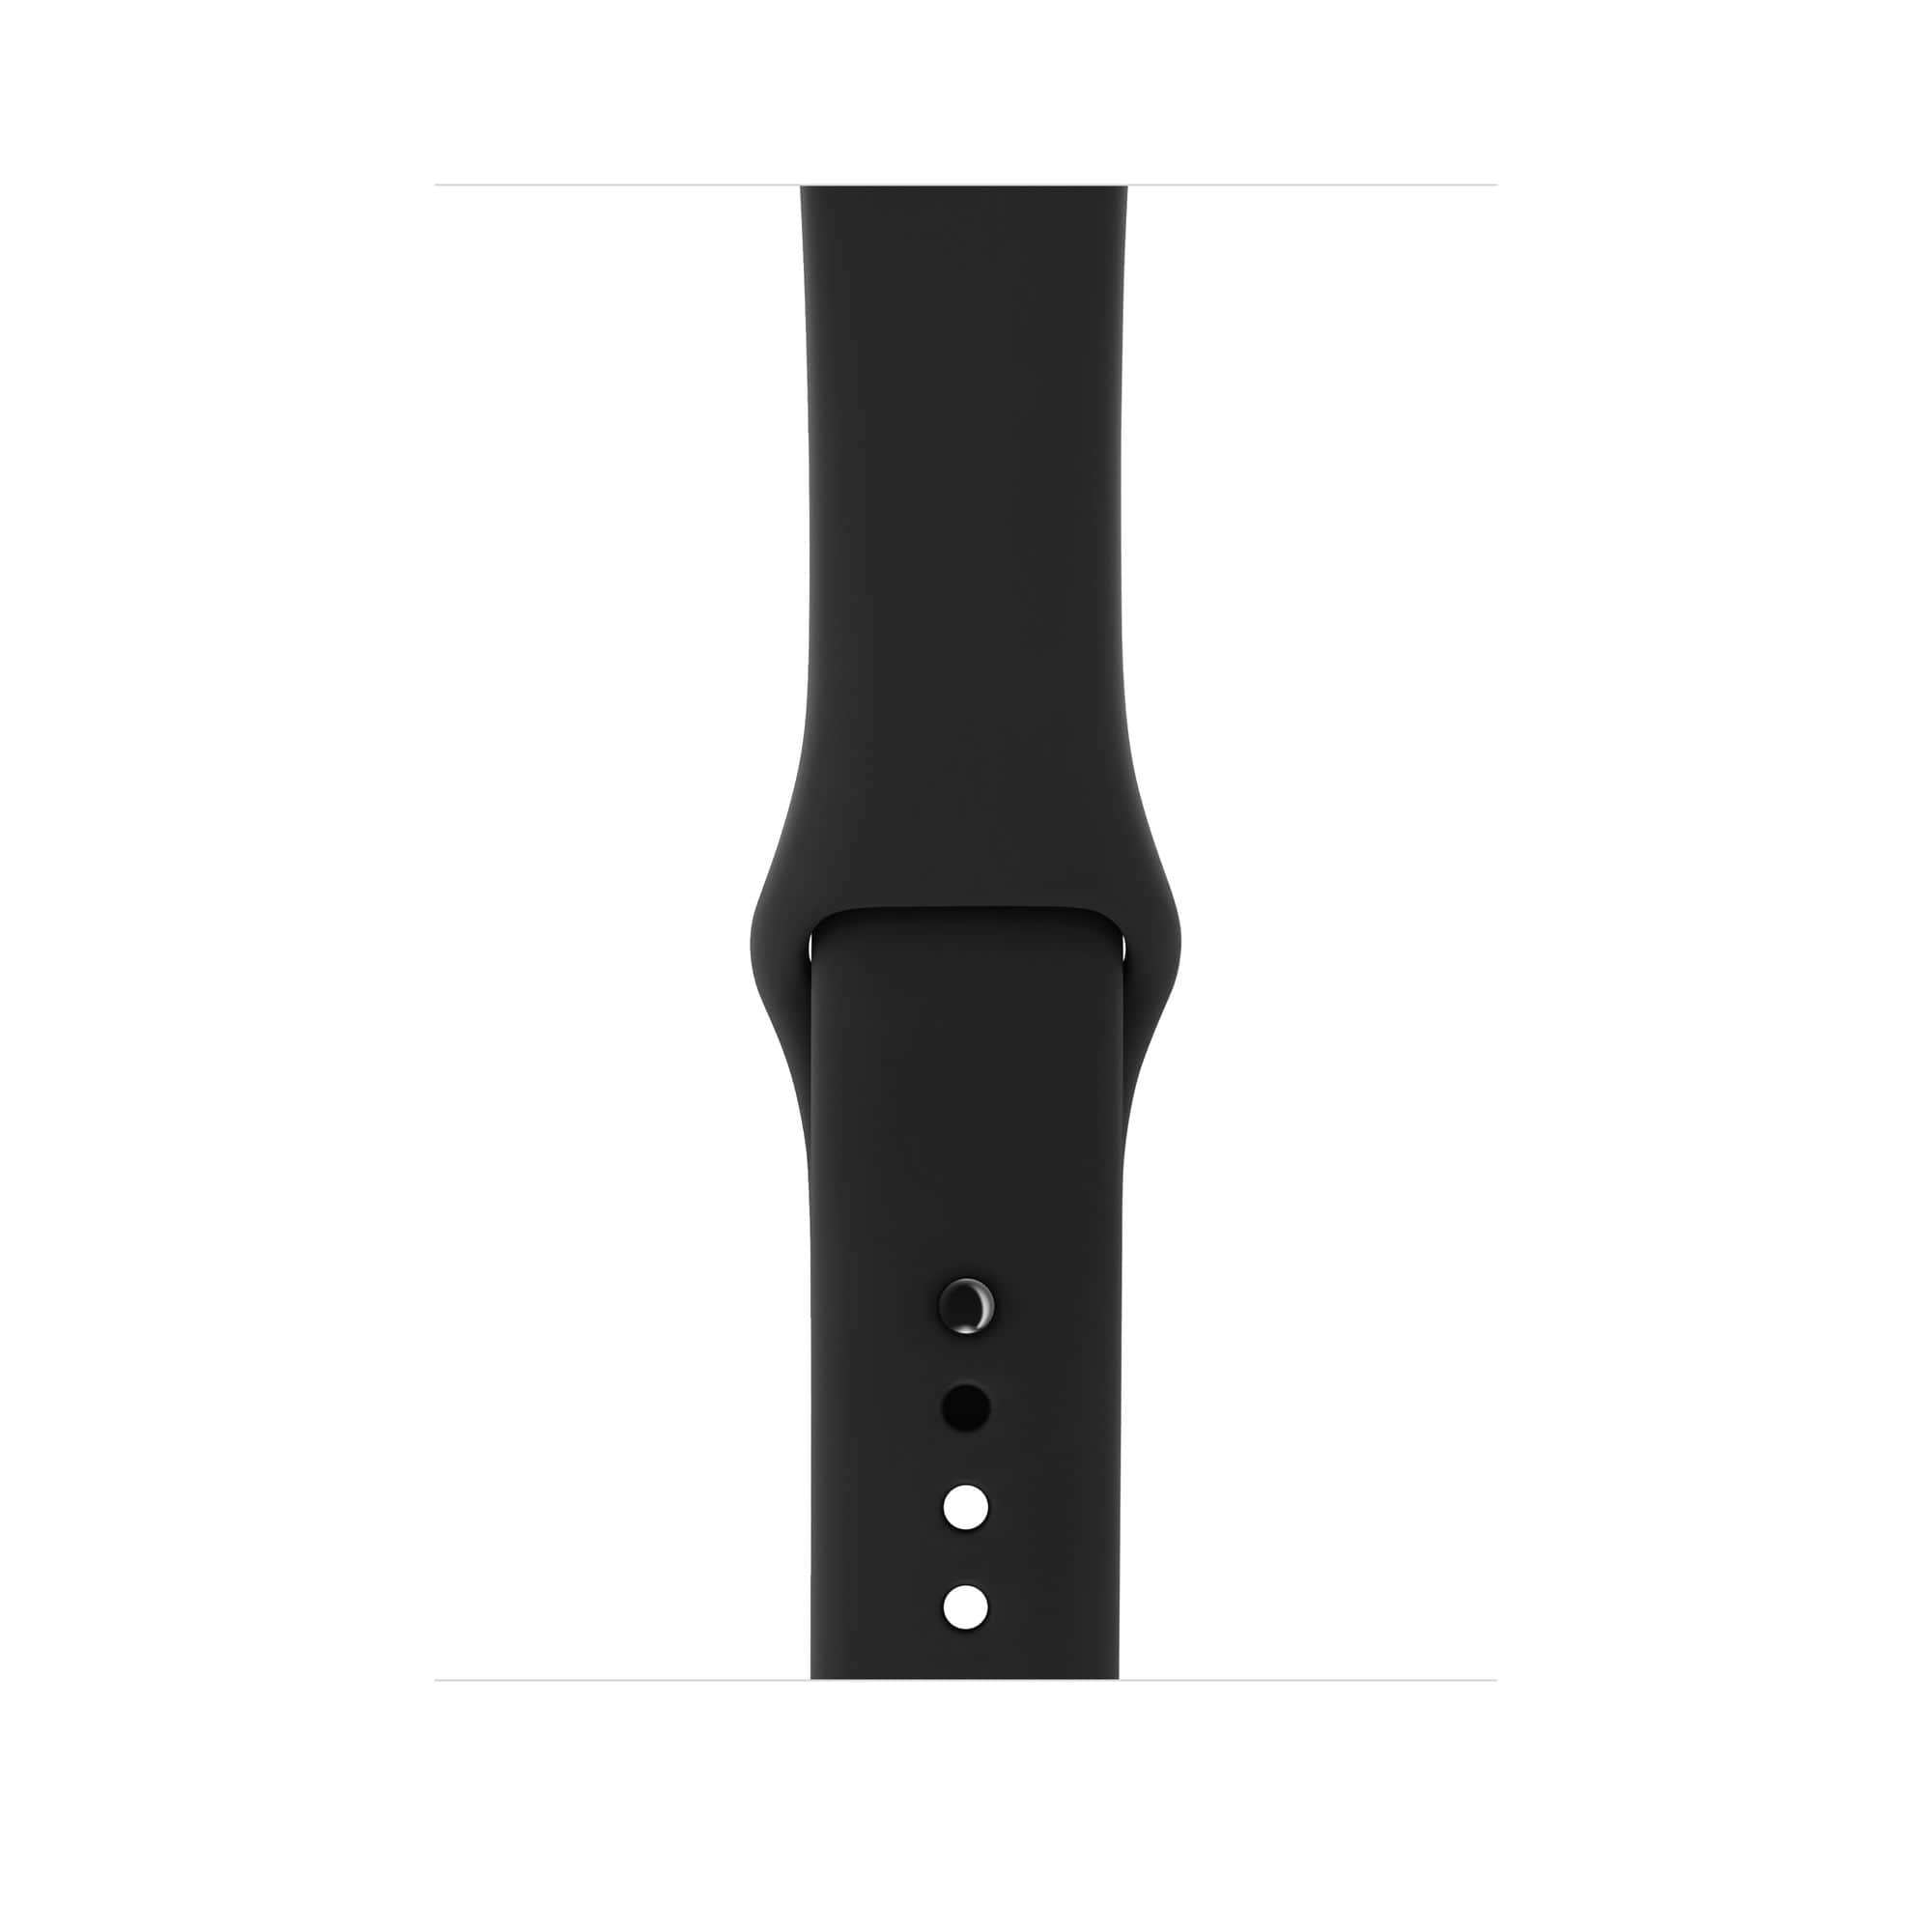 Apple Watch Series 3 GPS 38mm Uzay Grisi Alüminyum Kasa - Siyah Spor Kordon MTF02TU/A